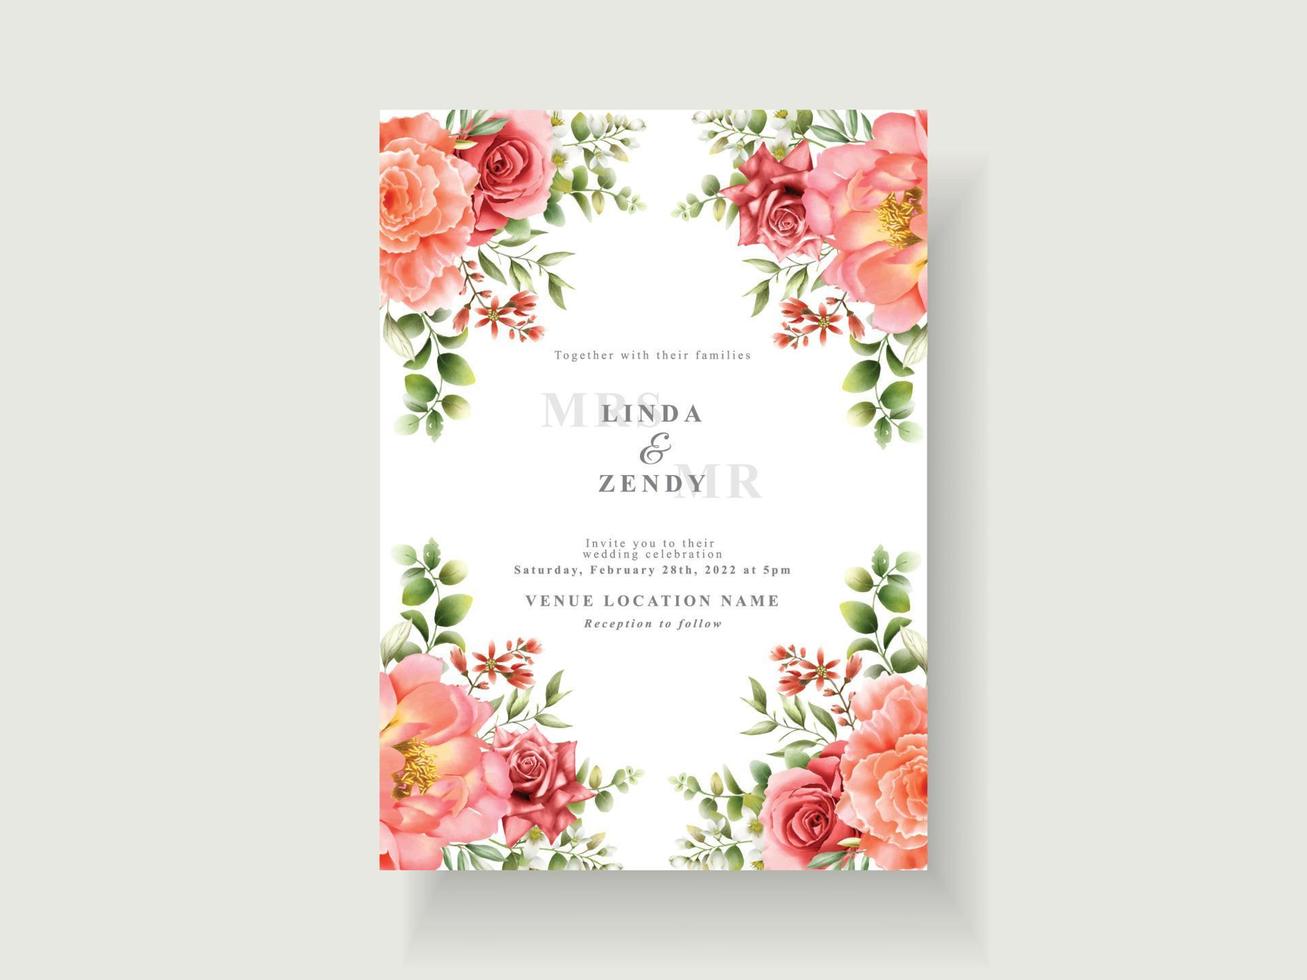 beautiful floral wedding invitation card vector